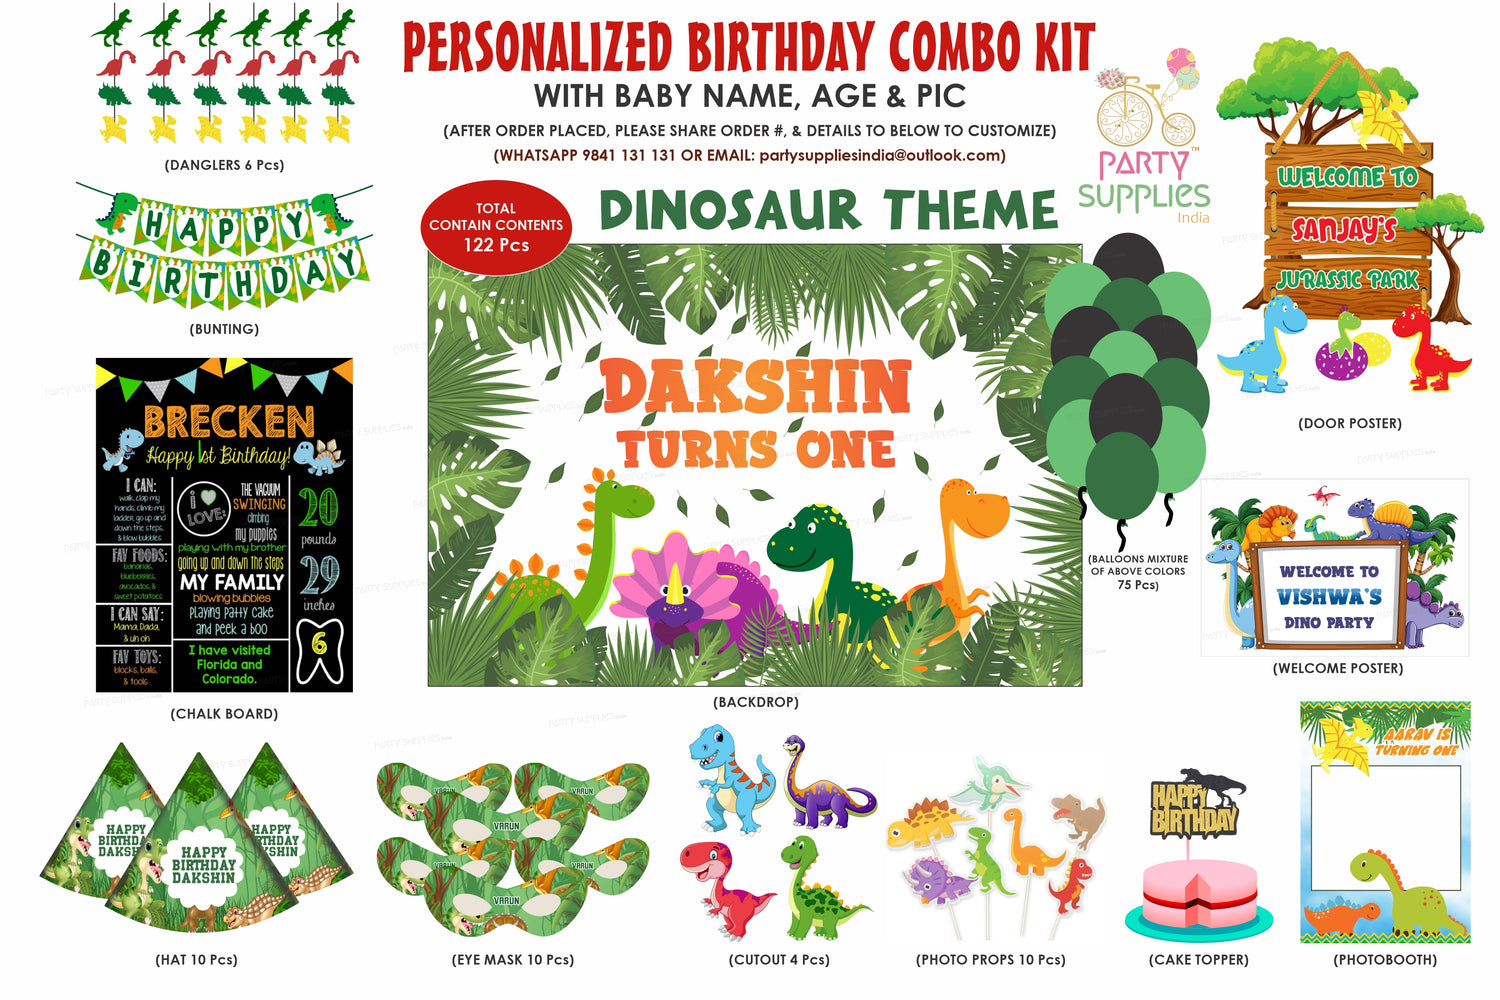 PSI Dinosaur Theme Classic Kit